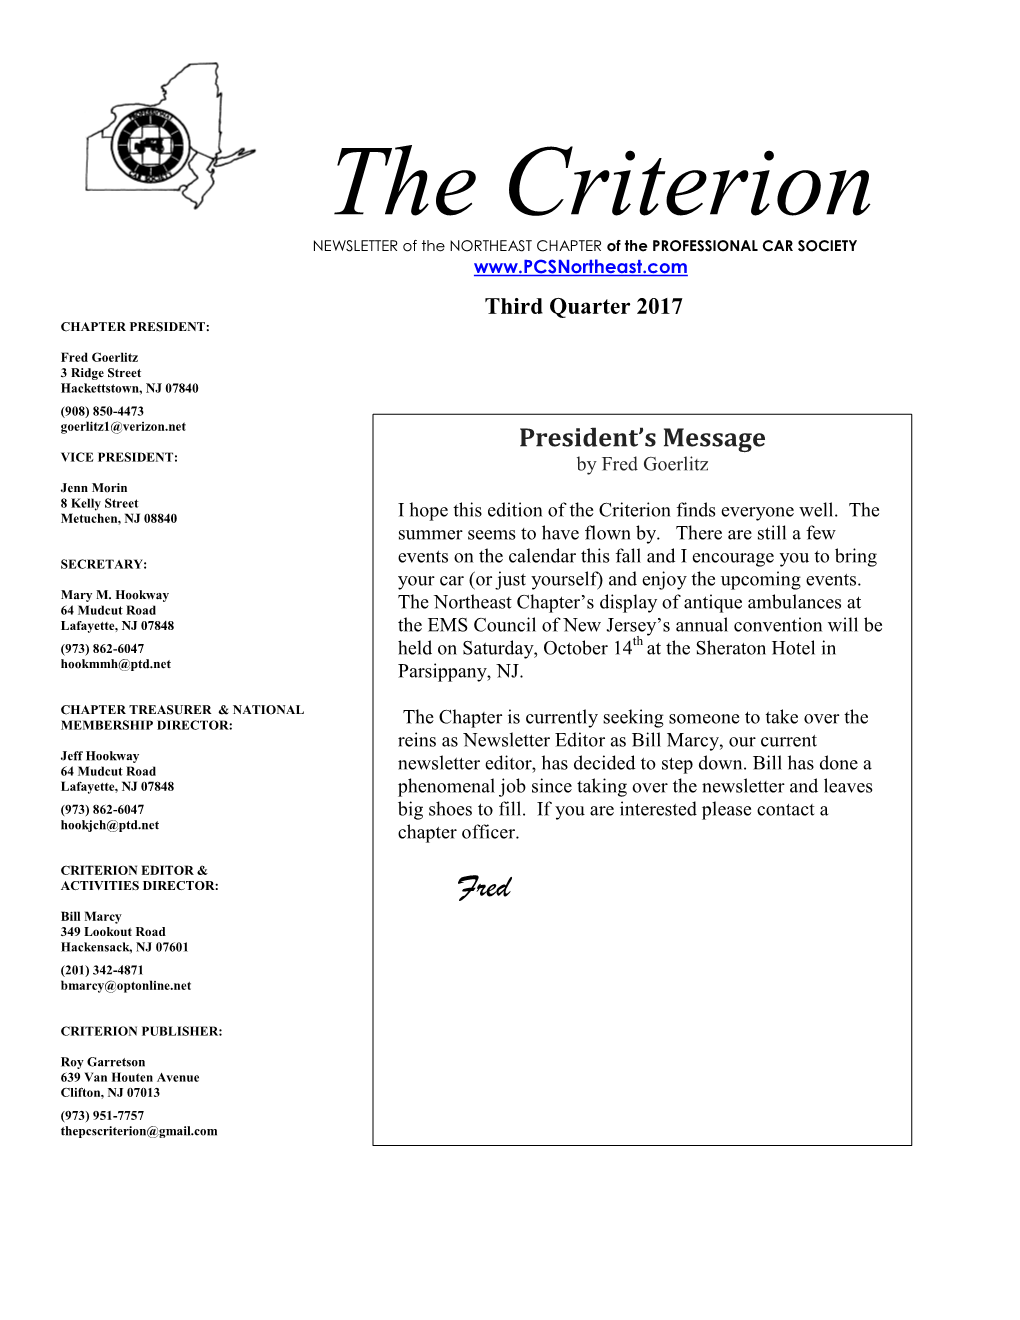 Criterion2017-3Rdq (Pdf)